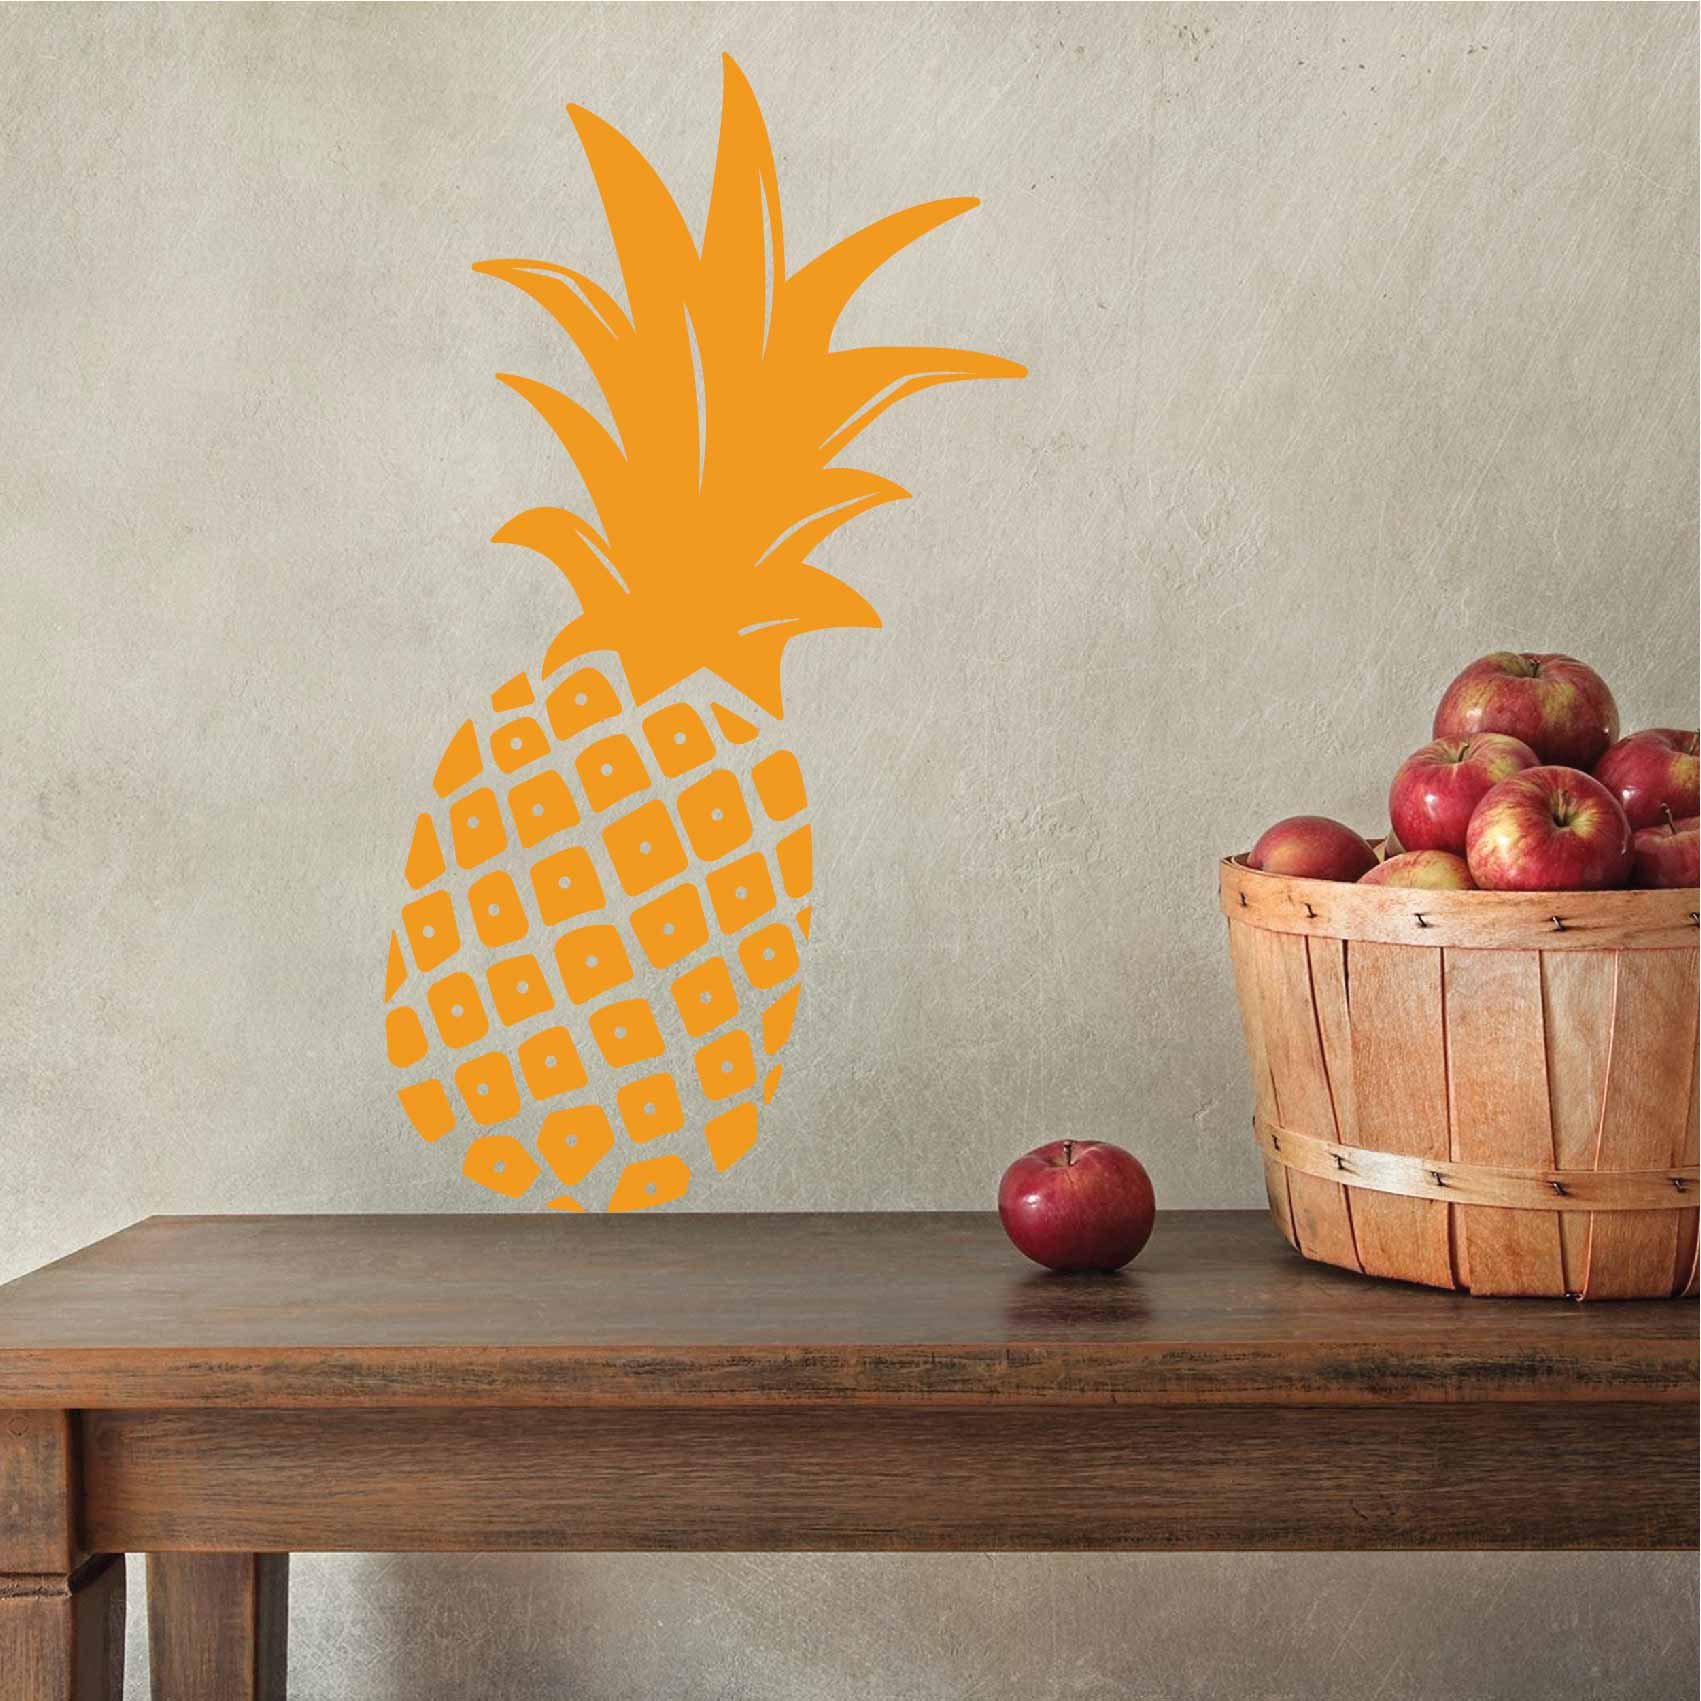 stickers-ananas-ref70cuisine-stickers-muraux-cuisine-autocollant-deco-cuisine-chambre-salon-sticker-mural-decoration